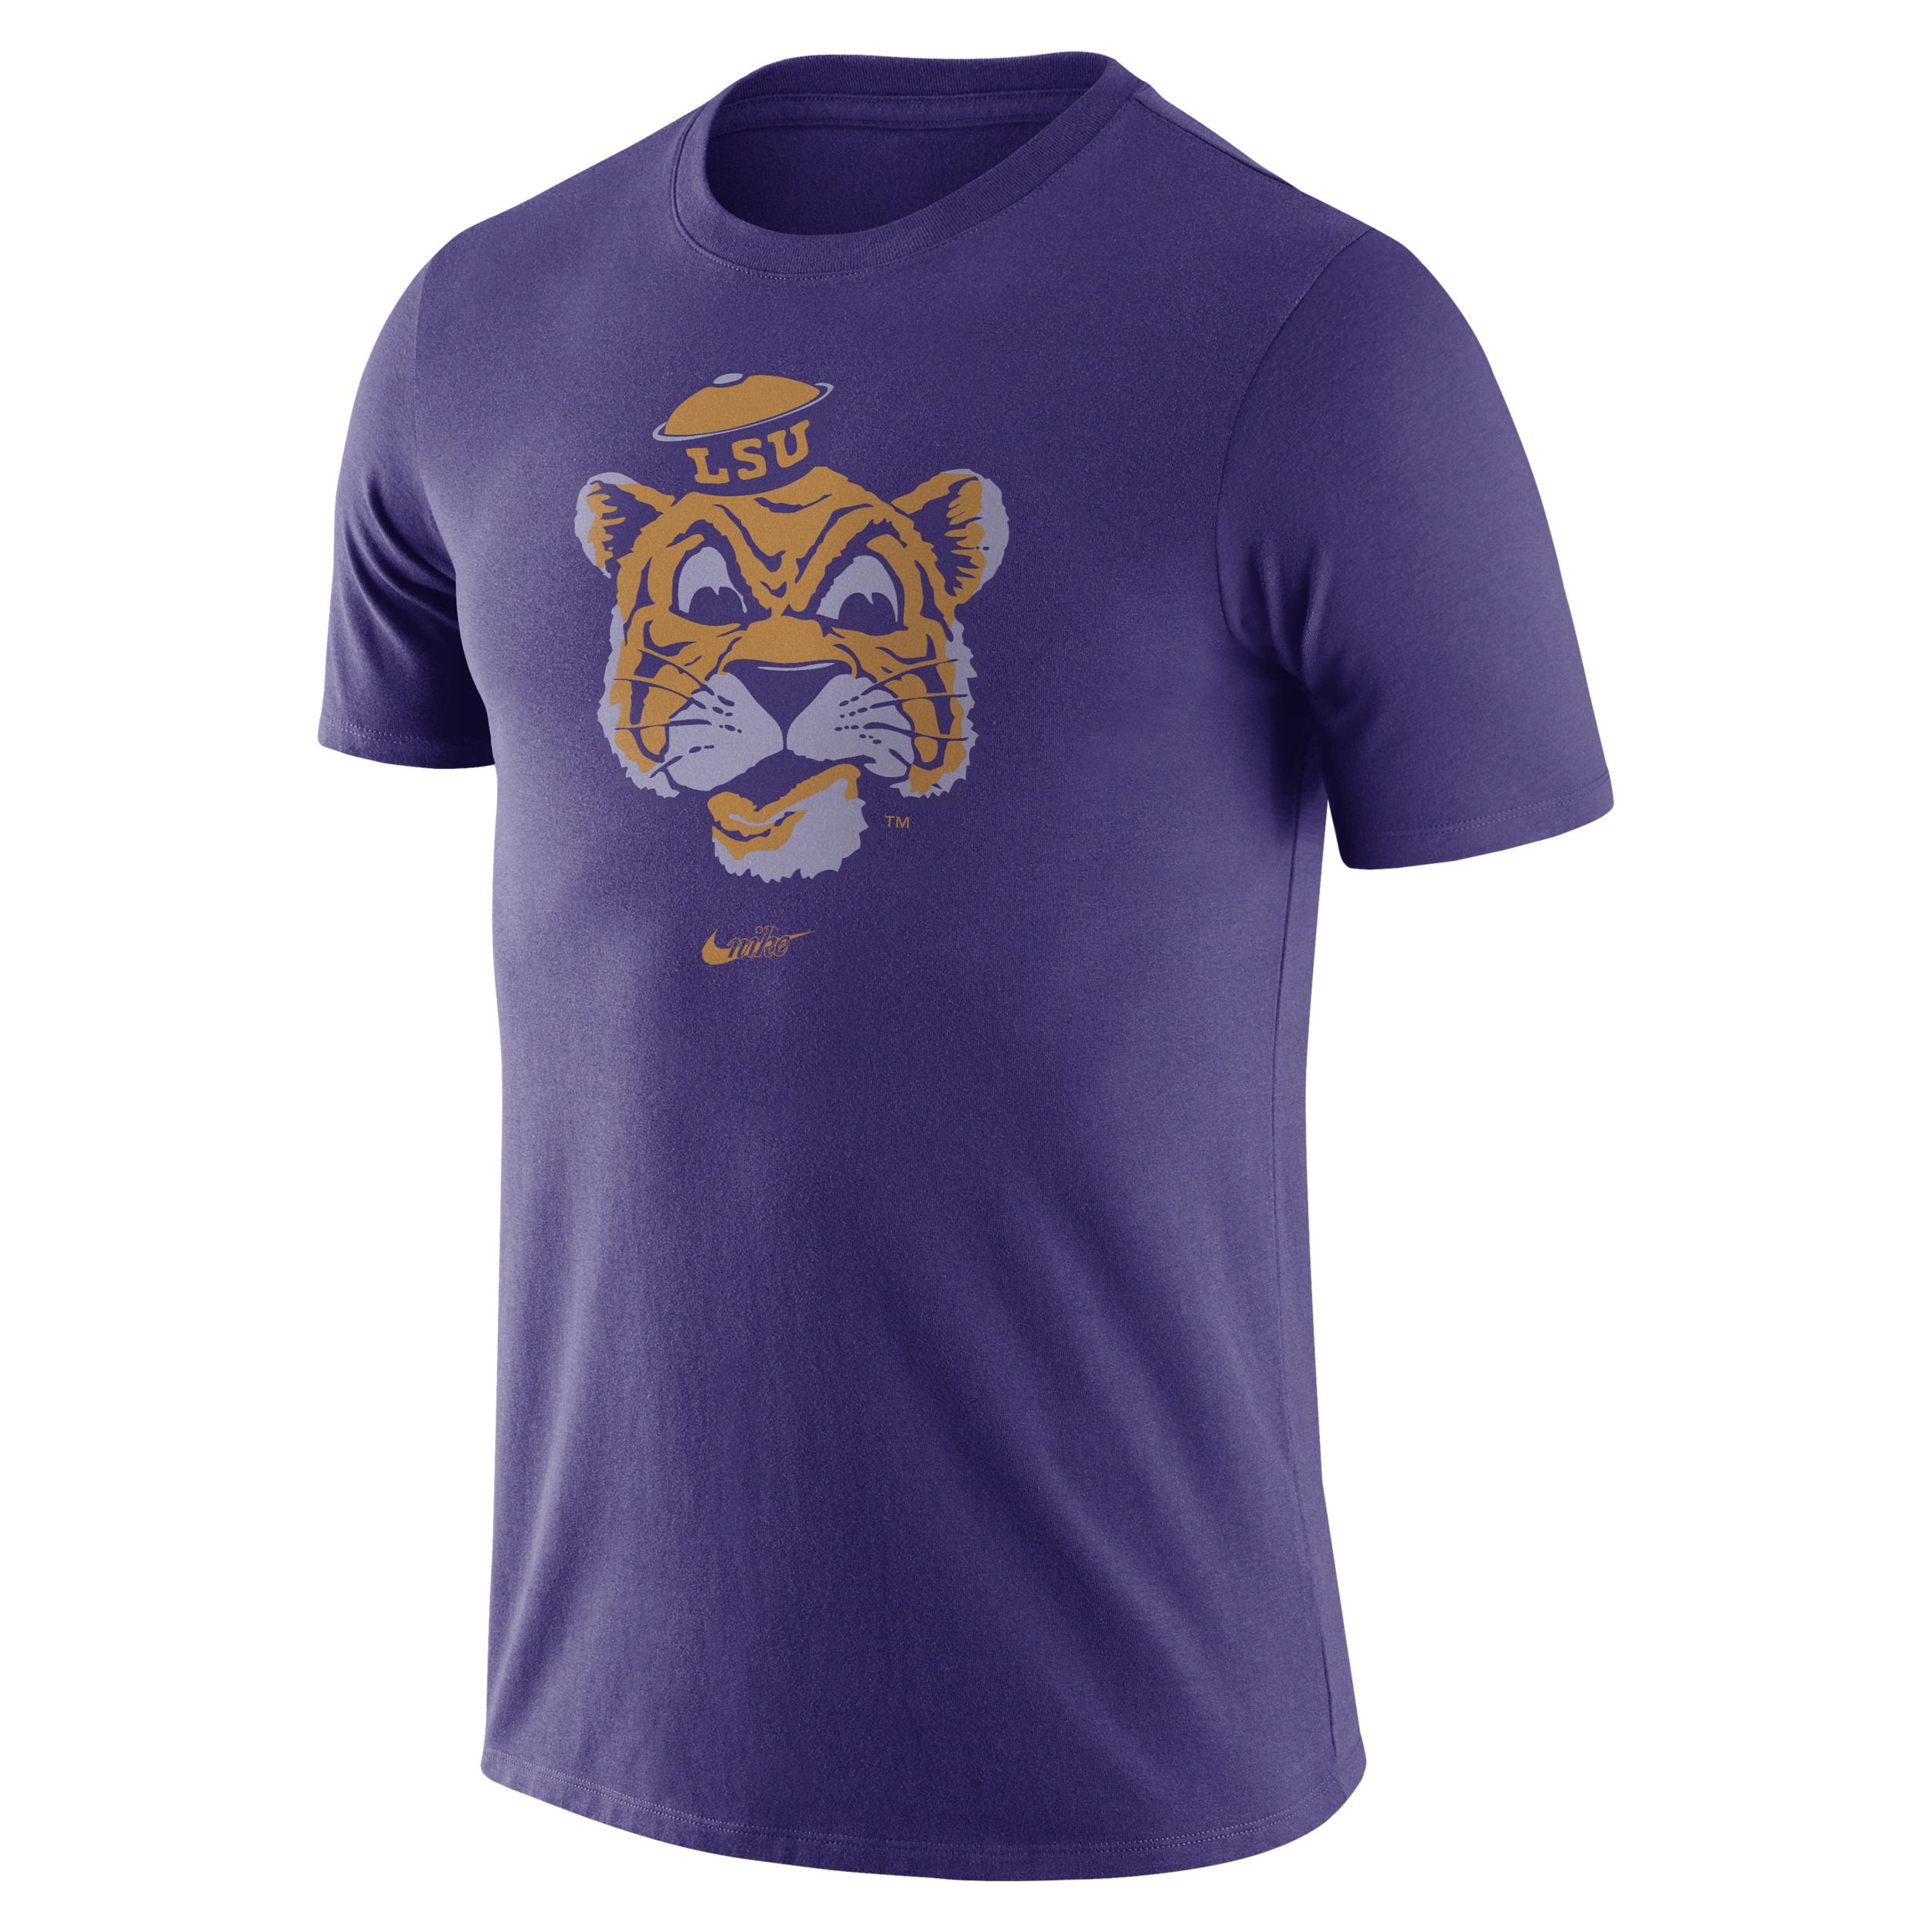 Nike College (lsu) Logo T-shirt In Purple, for Men | Lyst